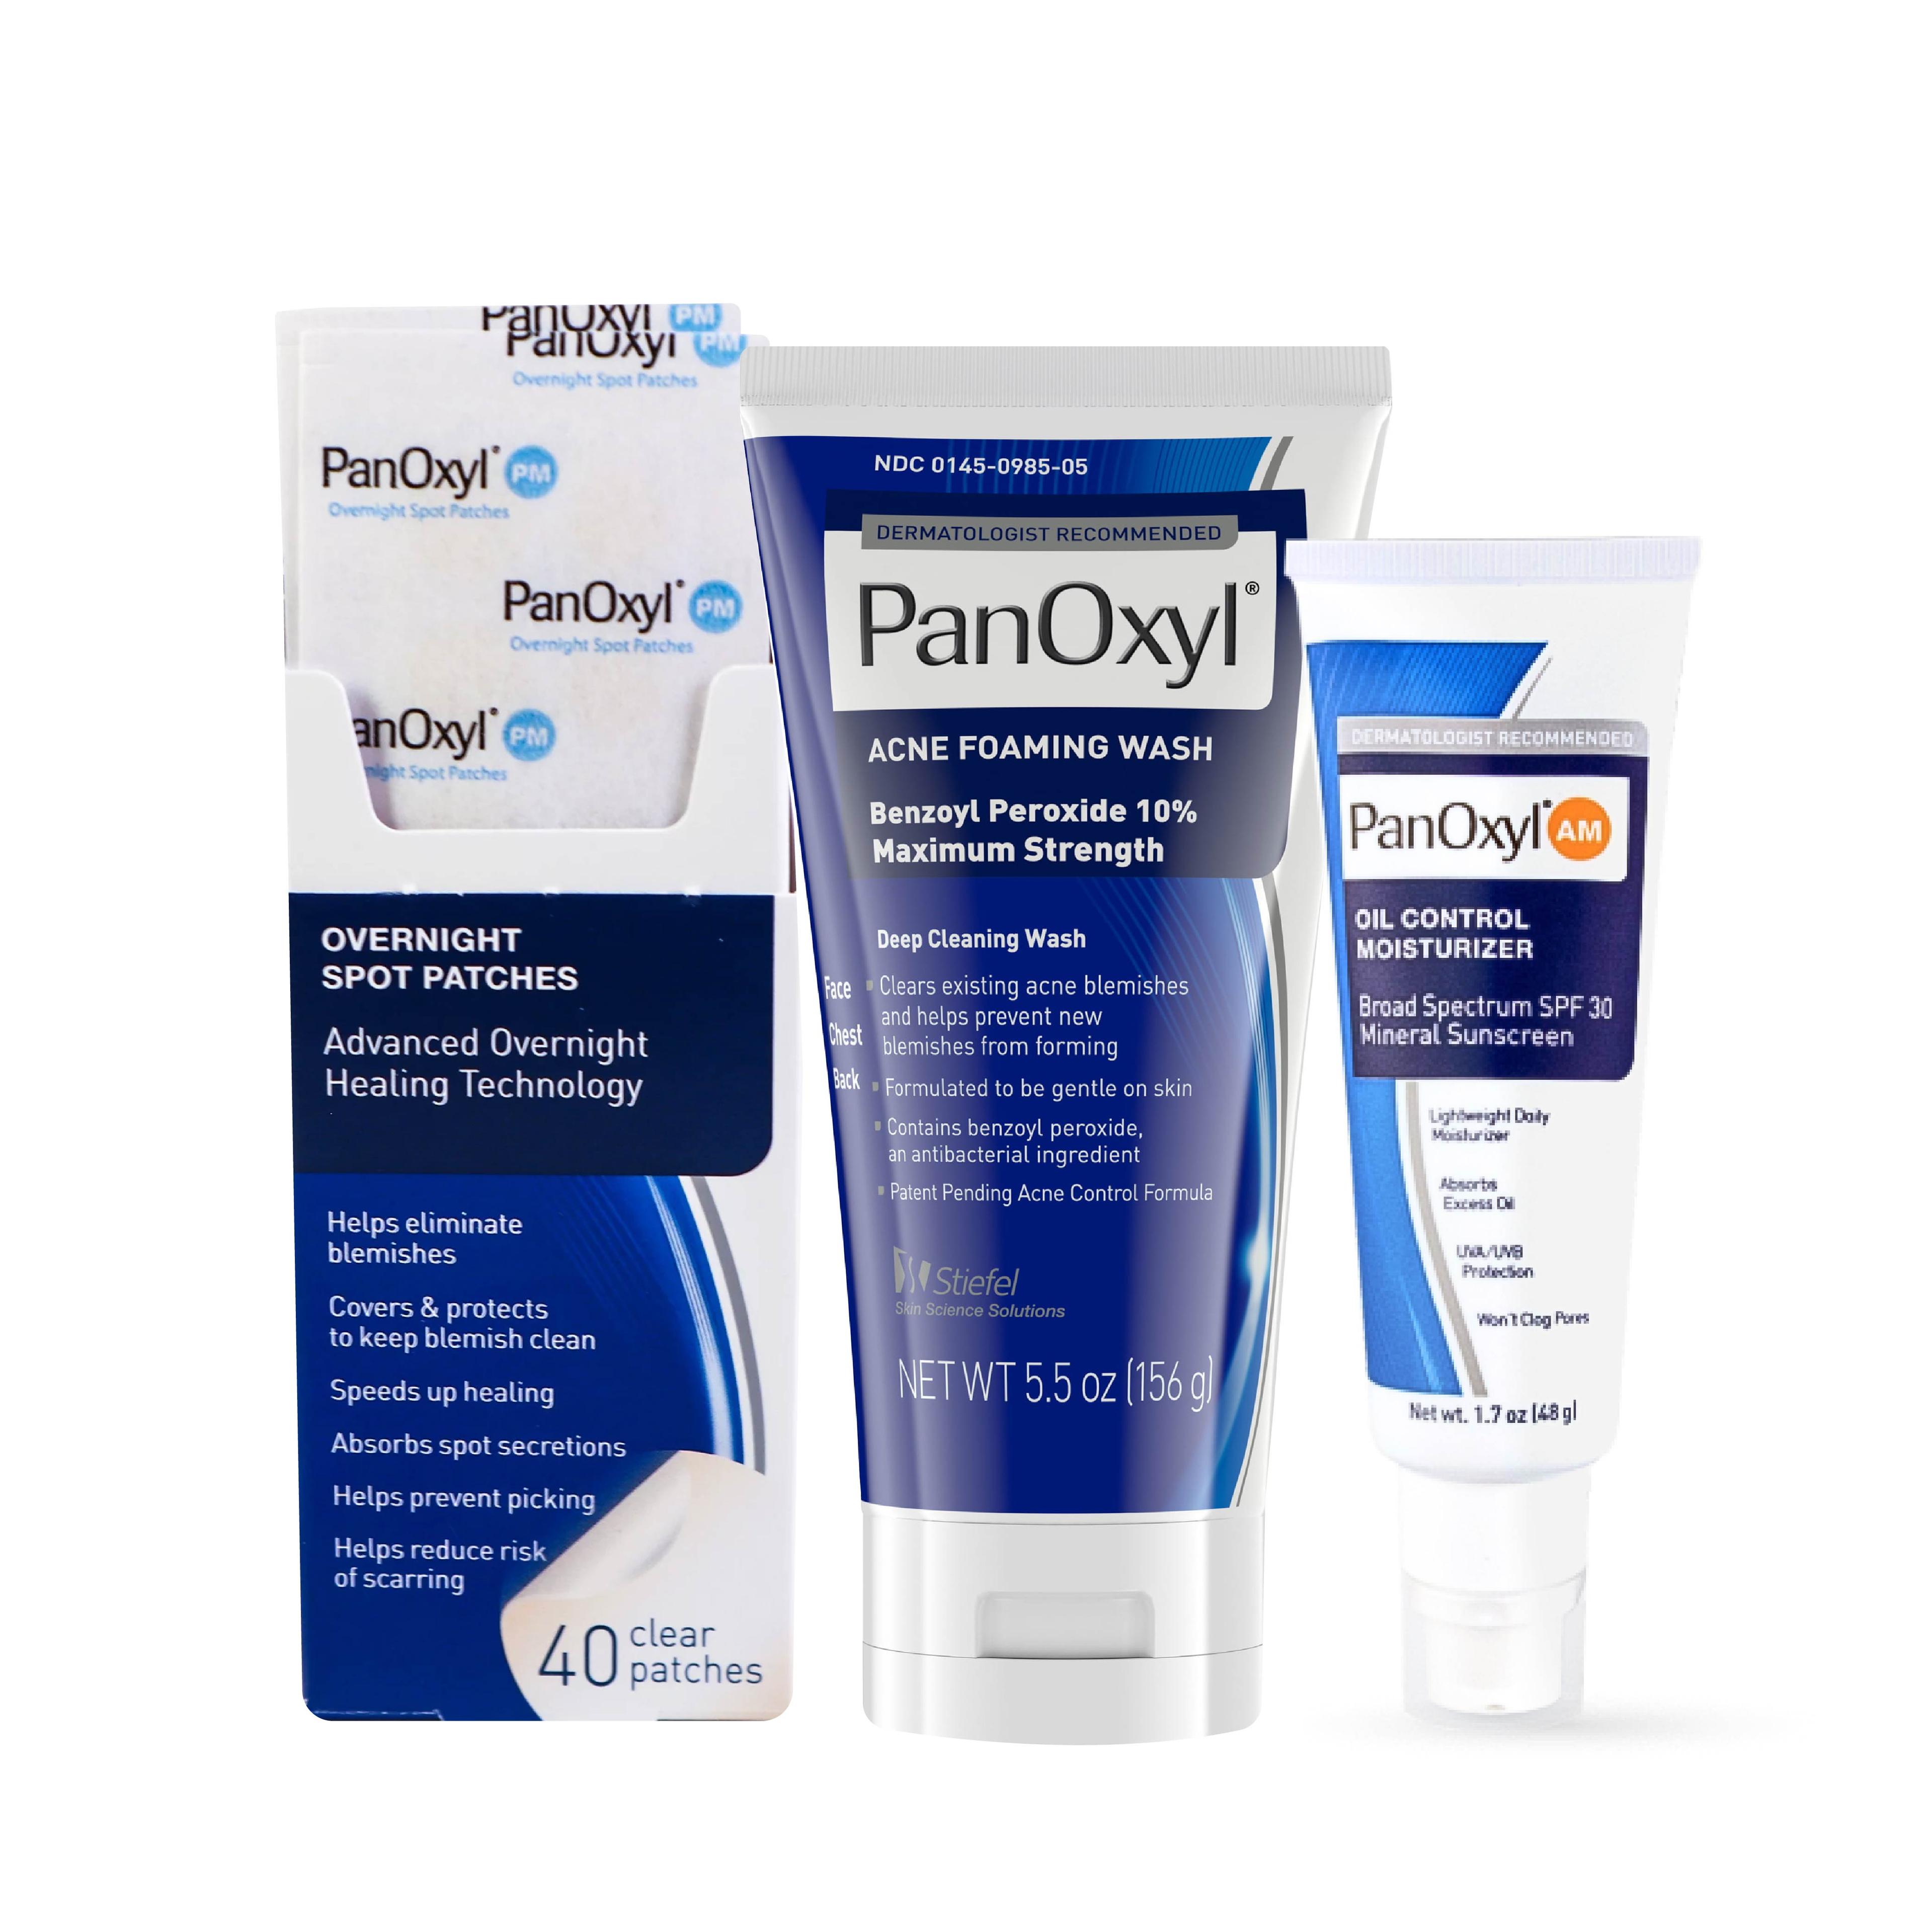 Panoxyl 3 pcs Bundle Set [ PanOxyl PM Overnight Spot Patches + PanOxyl Acne Foaming Wash Benzoyl Peroxide 10% Maximum Strength + PanOxyl AM Oil Control Moisturizer SPF 30 ]